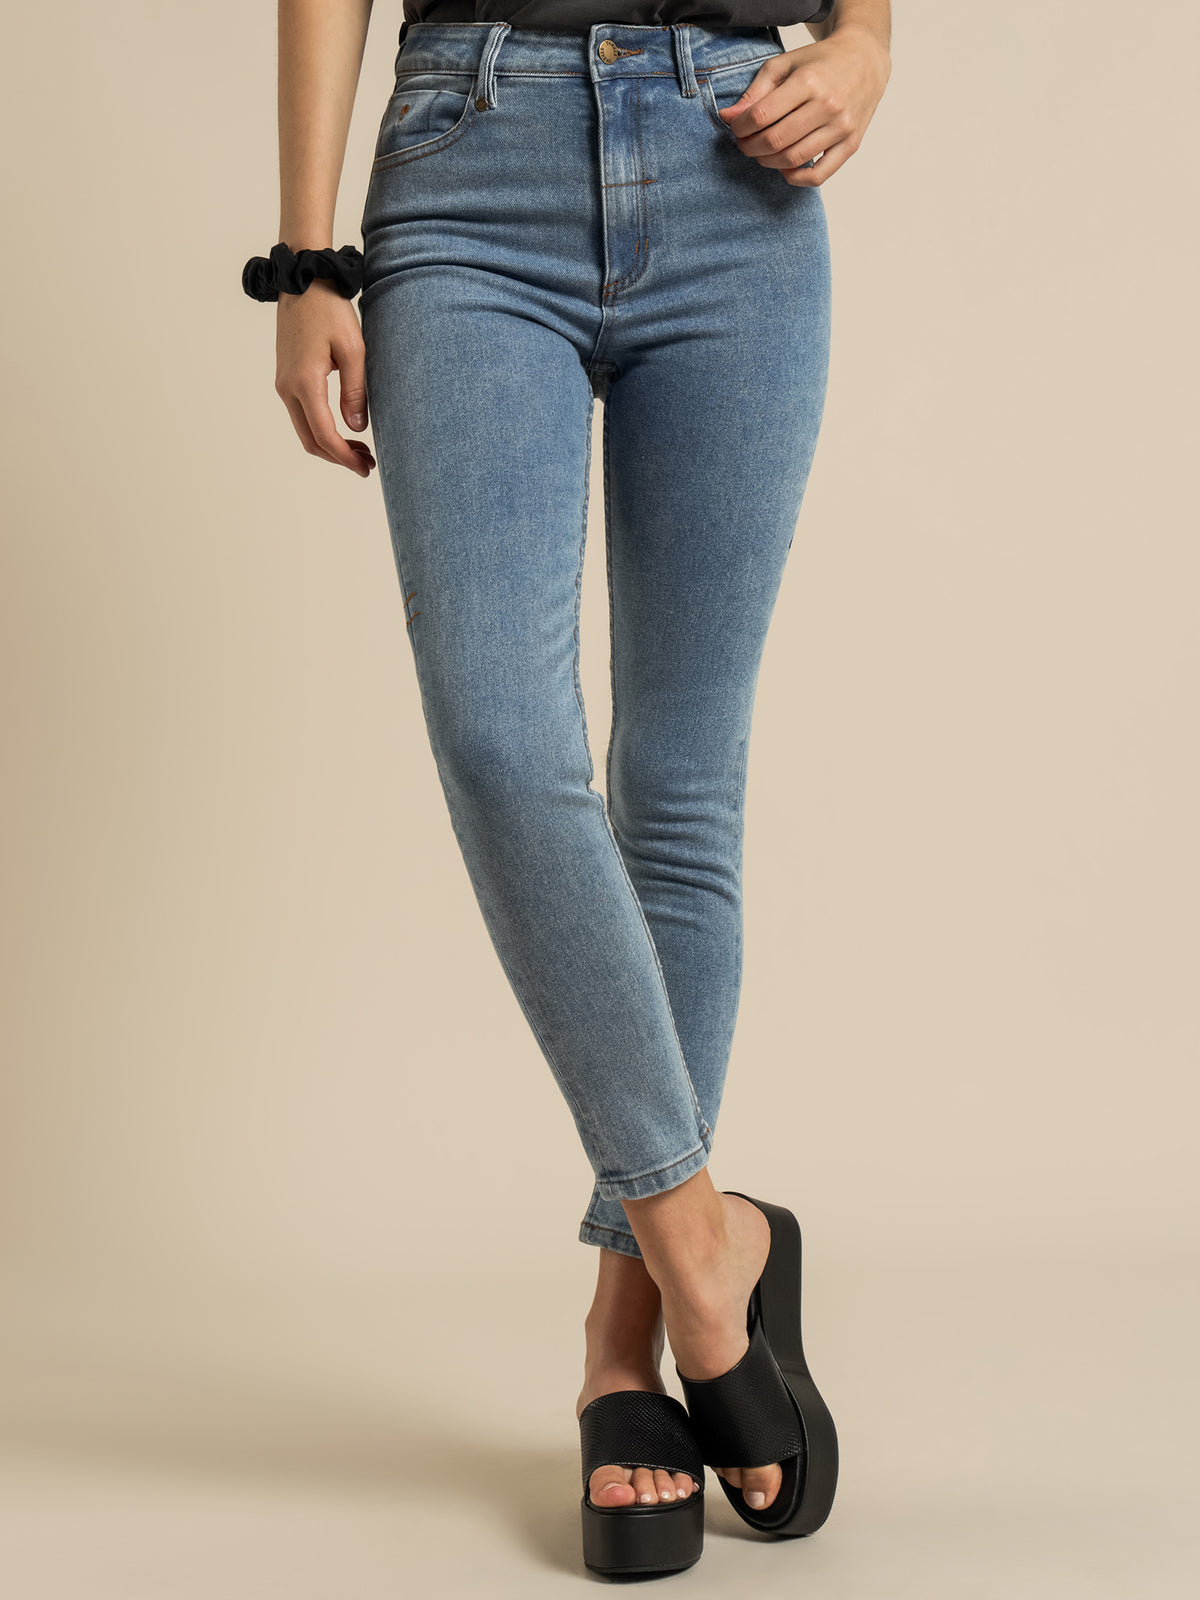 Elise Rigid Skinny Jeans in Mid Blue